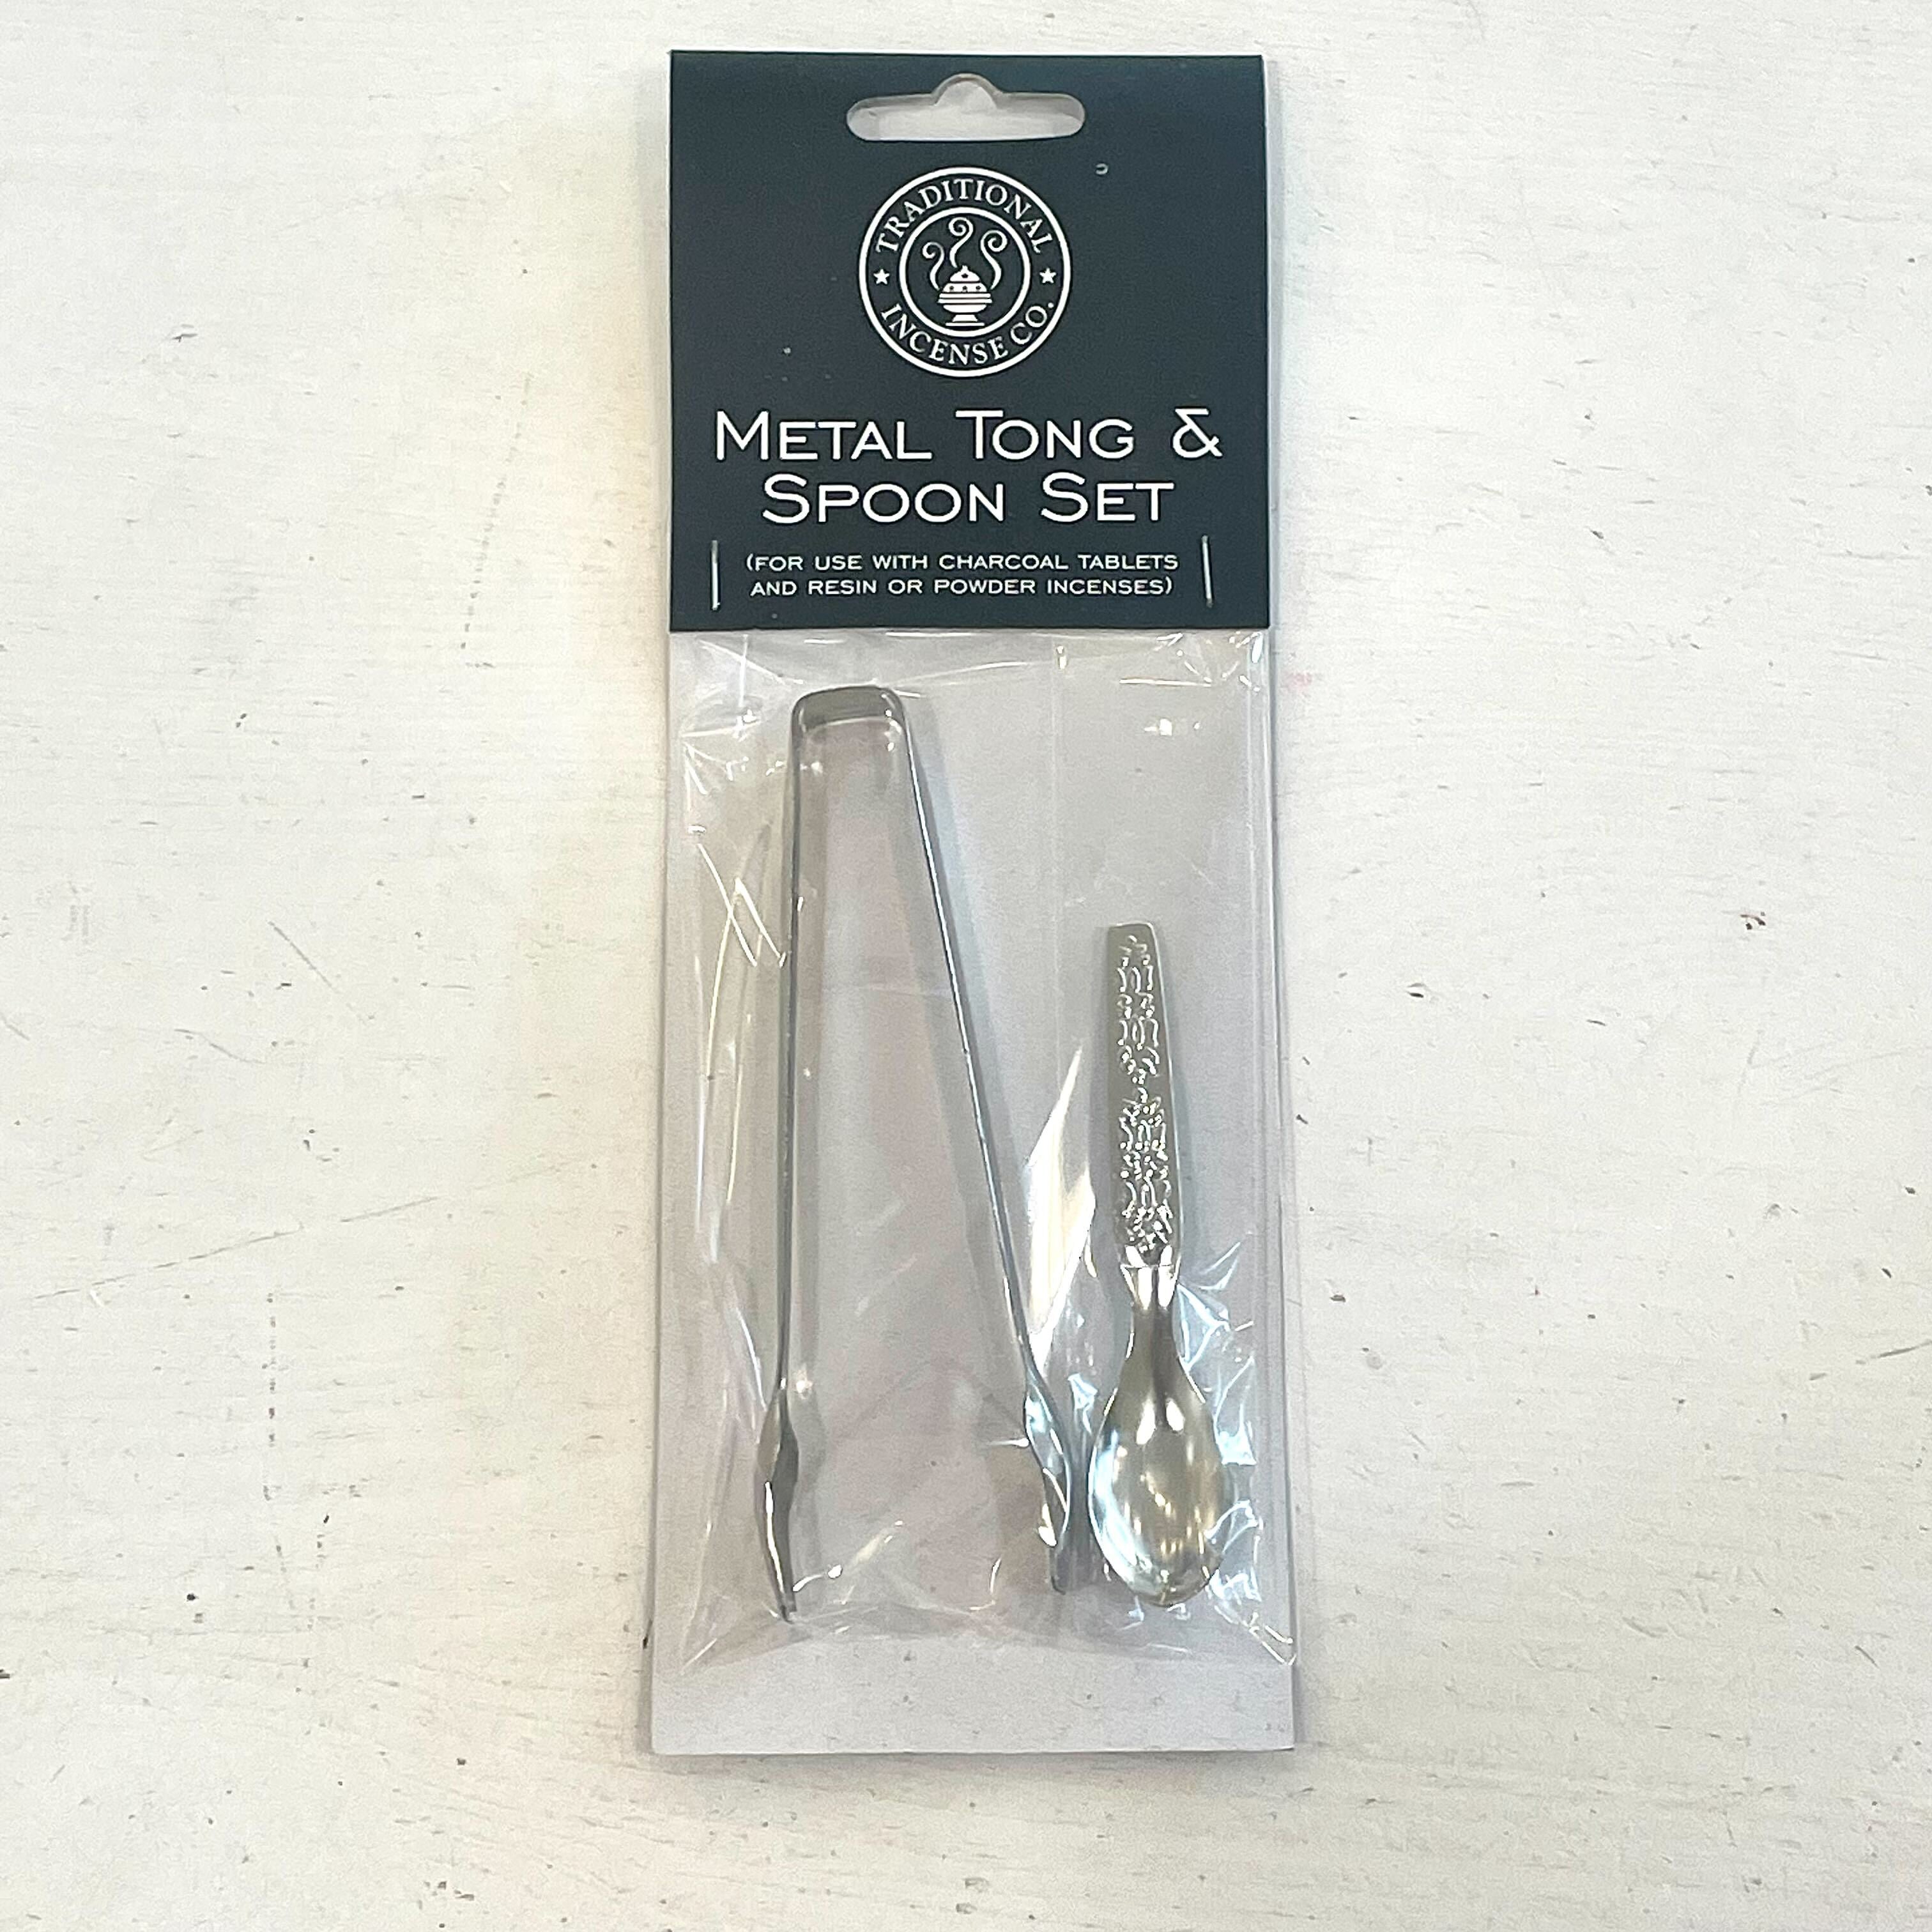 Metal Tong and Spoon Set